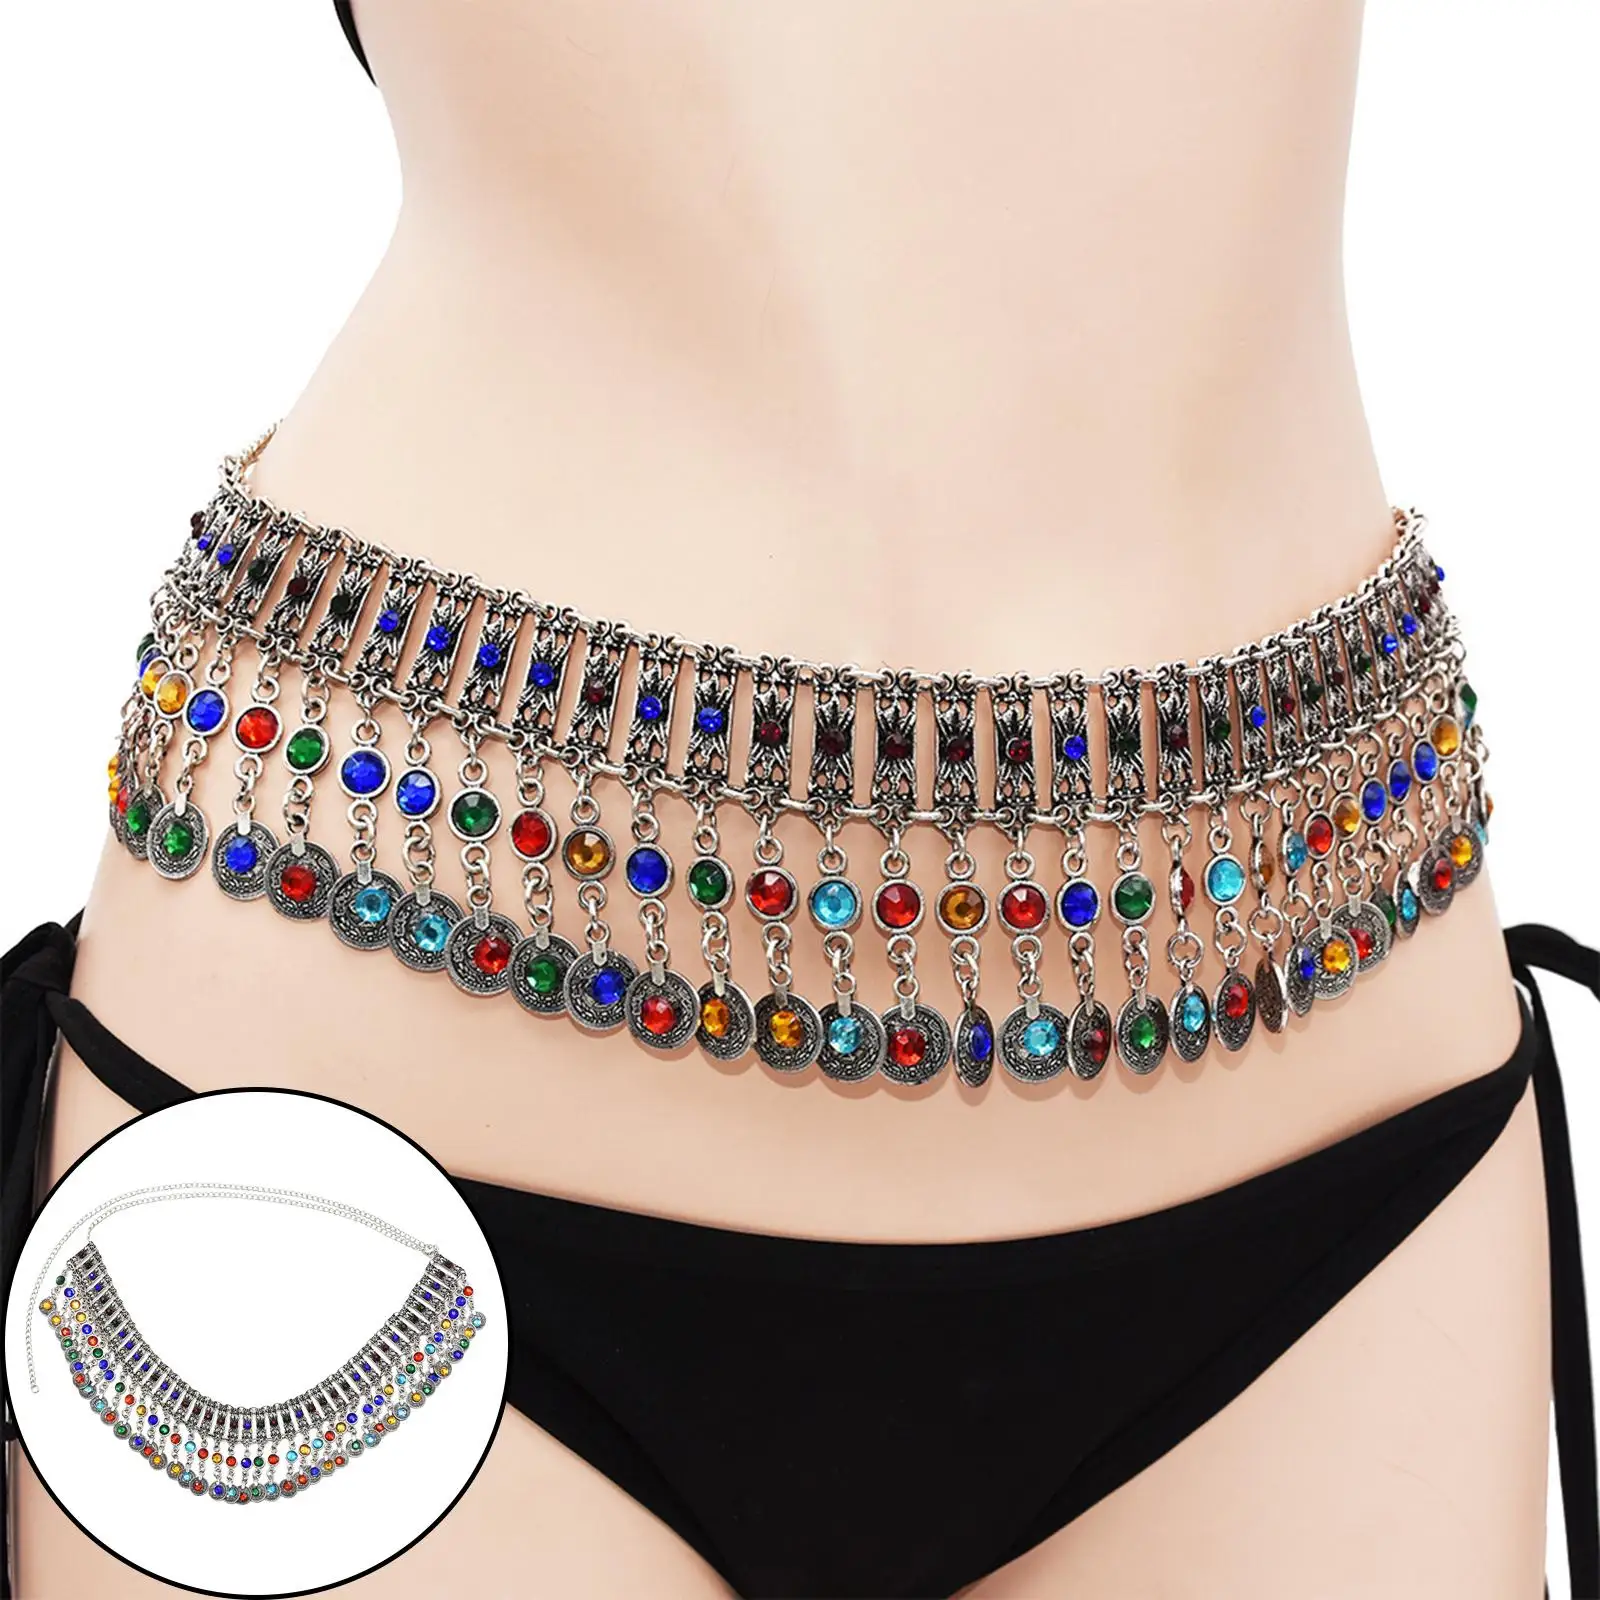 Waist Chain Ethnic Belly Dance Chain Body Jewelry Waistband Accessory